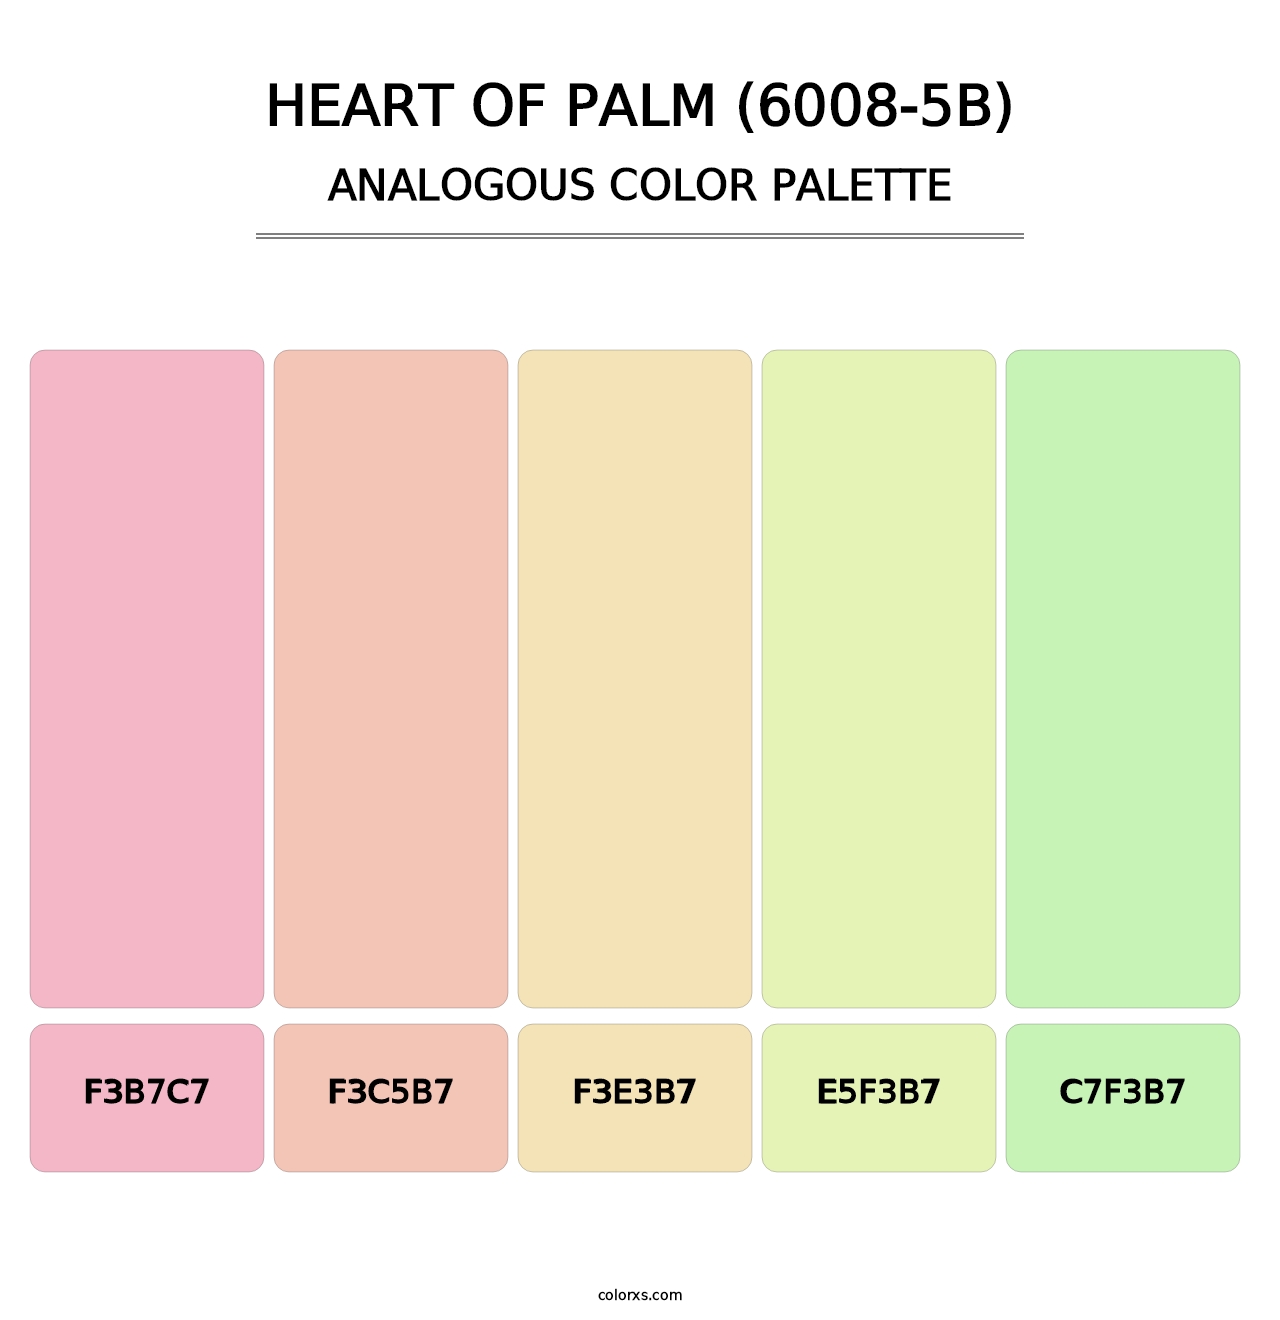 Heart of Palm (6008-5B) - Analogous Color Palette